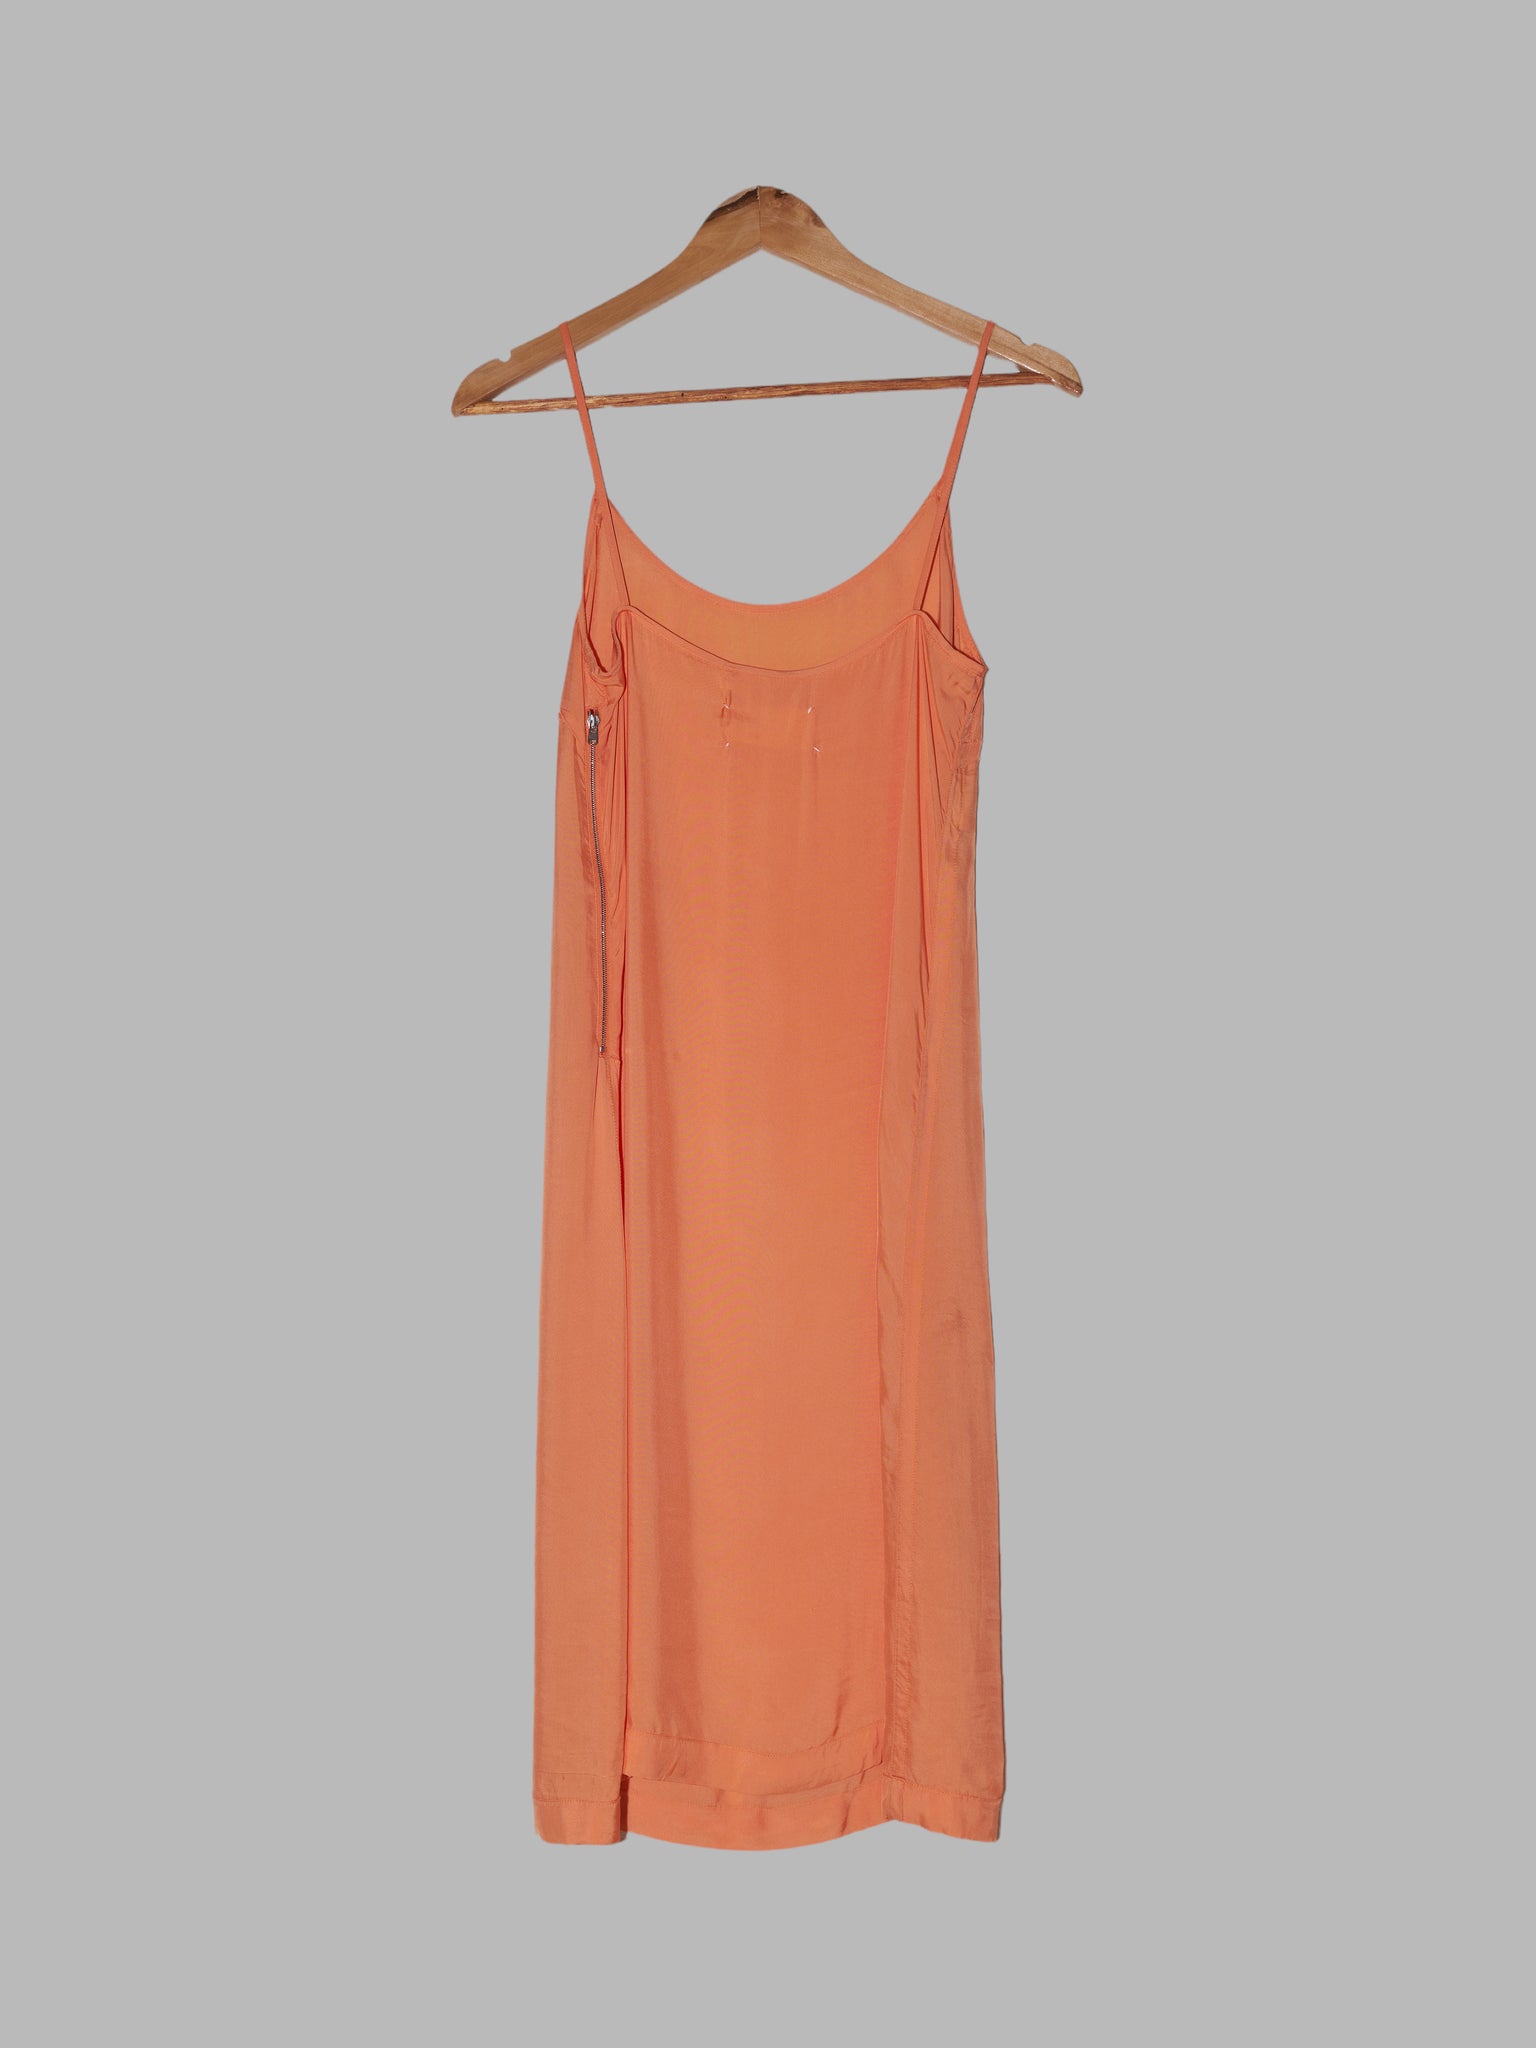 Maison Martin Margiela orange viscose slip dress - size 40 8